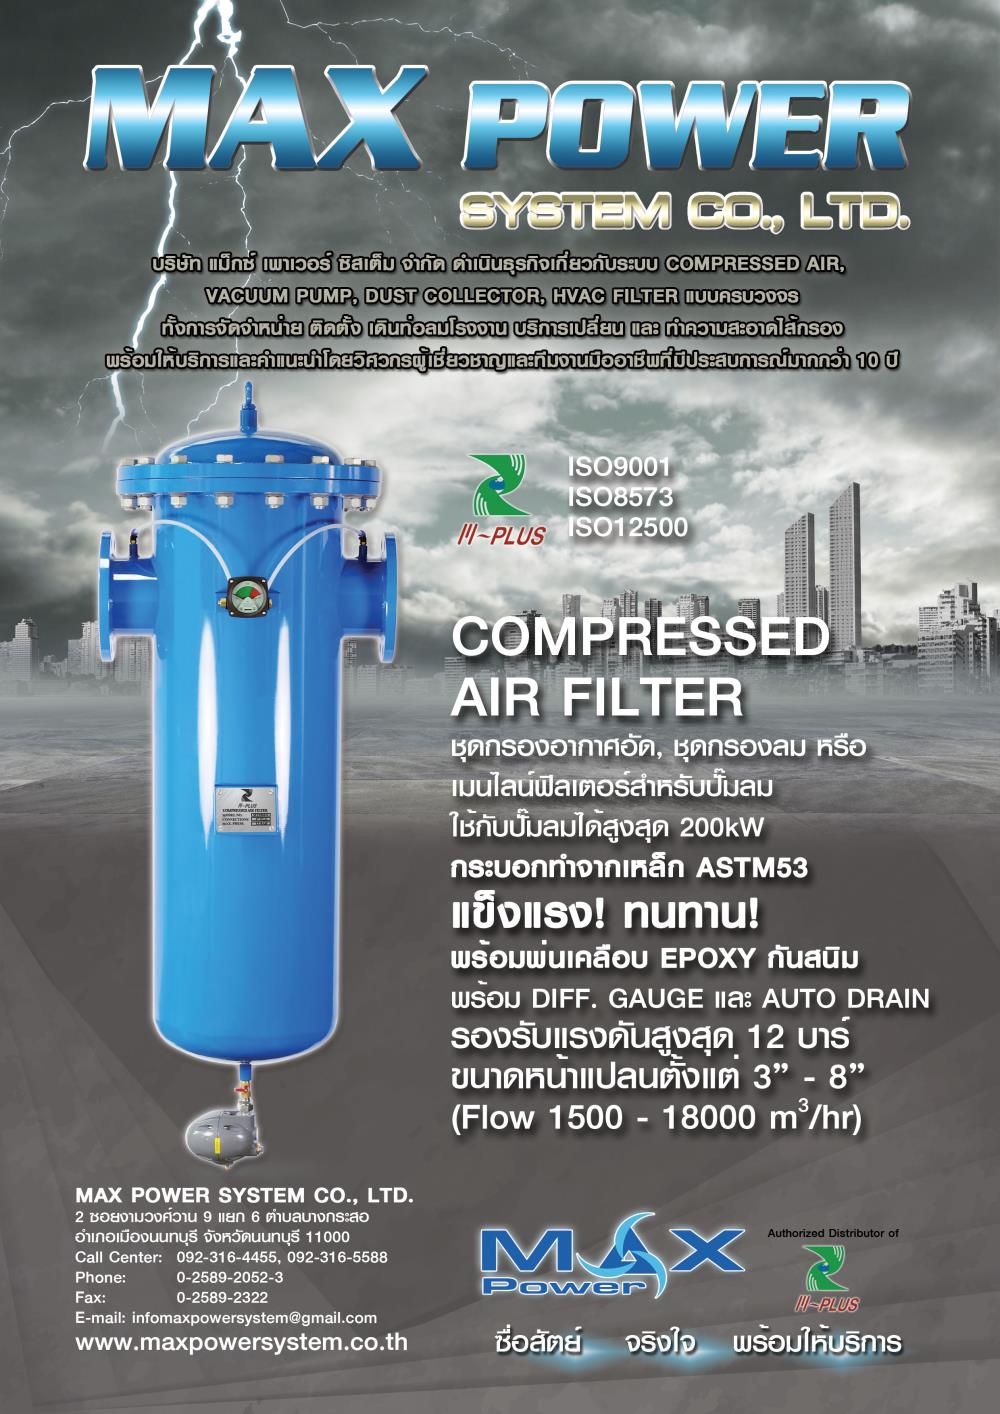 Compressed Air Filter (Flange type) / ชุดกรองอากาศแบบหน้าแปลนขนาด 1,500 ถึง 18,000 คิว/ชม.,Compressed Air Filter, Main line filter, ชุดกรองลม, ชุดกรองอากาศ, ฟิลเตอร์, หน้าแปลน, ไส้กรอง, ปั๊มลม,M-PLUS,Machinery and Process Equipment/Filters/Filtering Systems